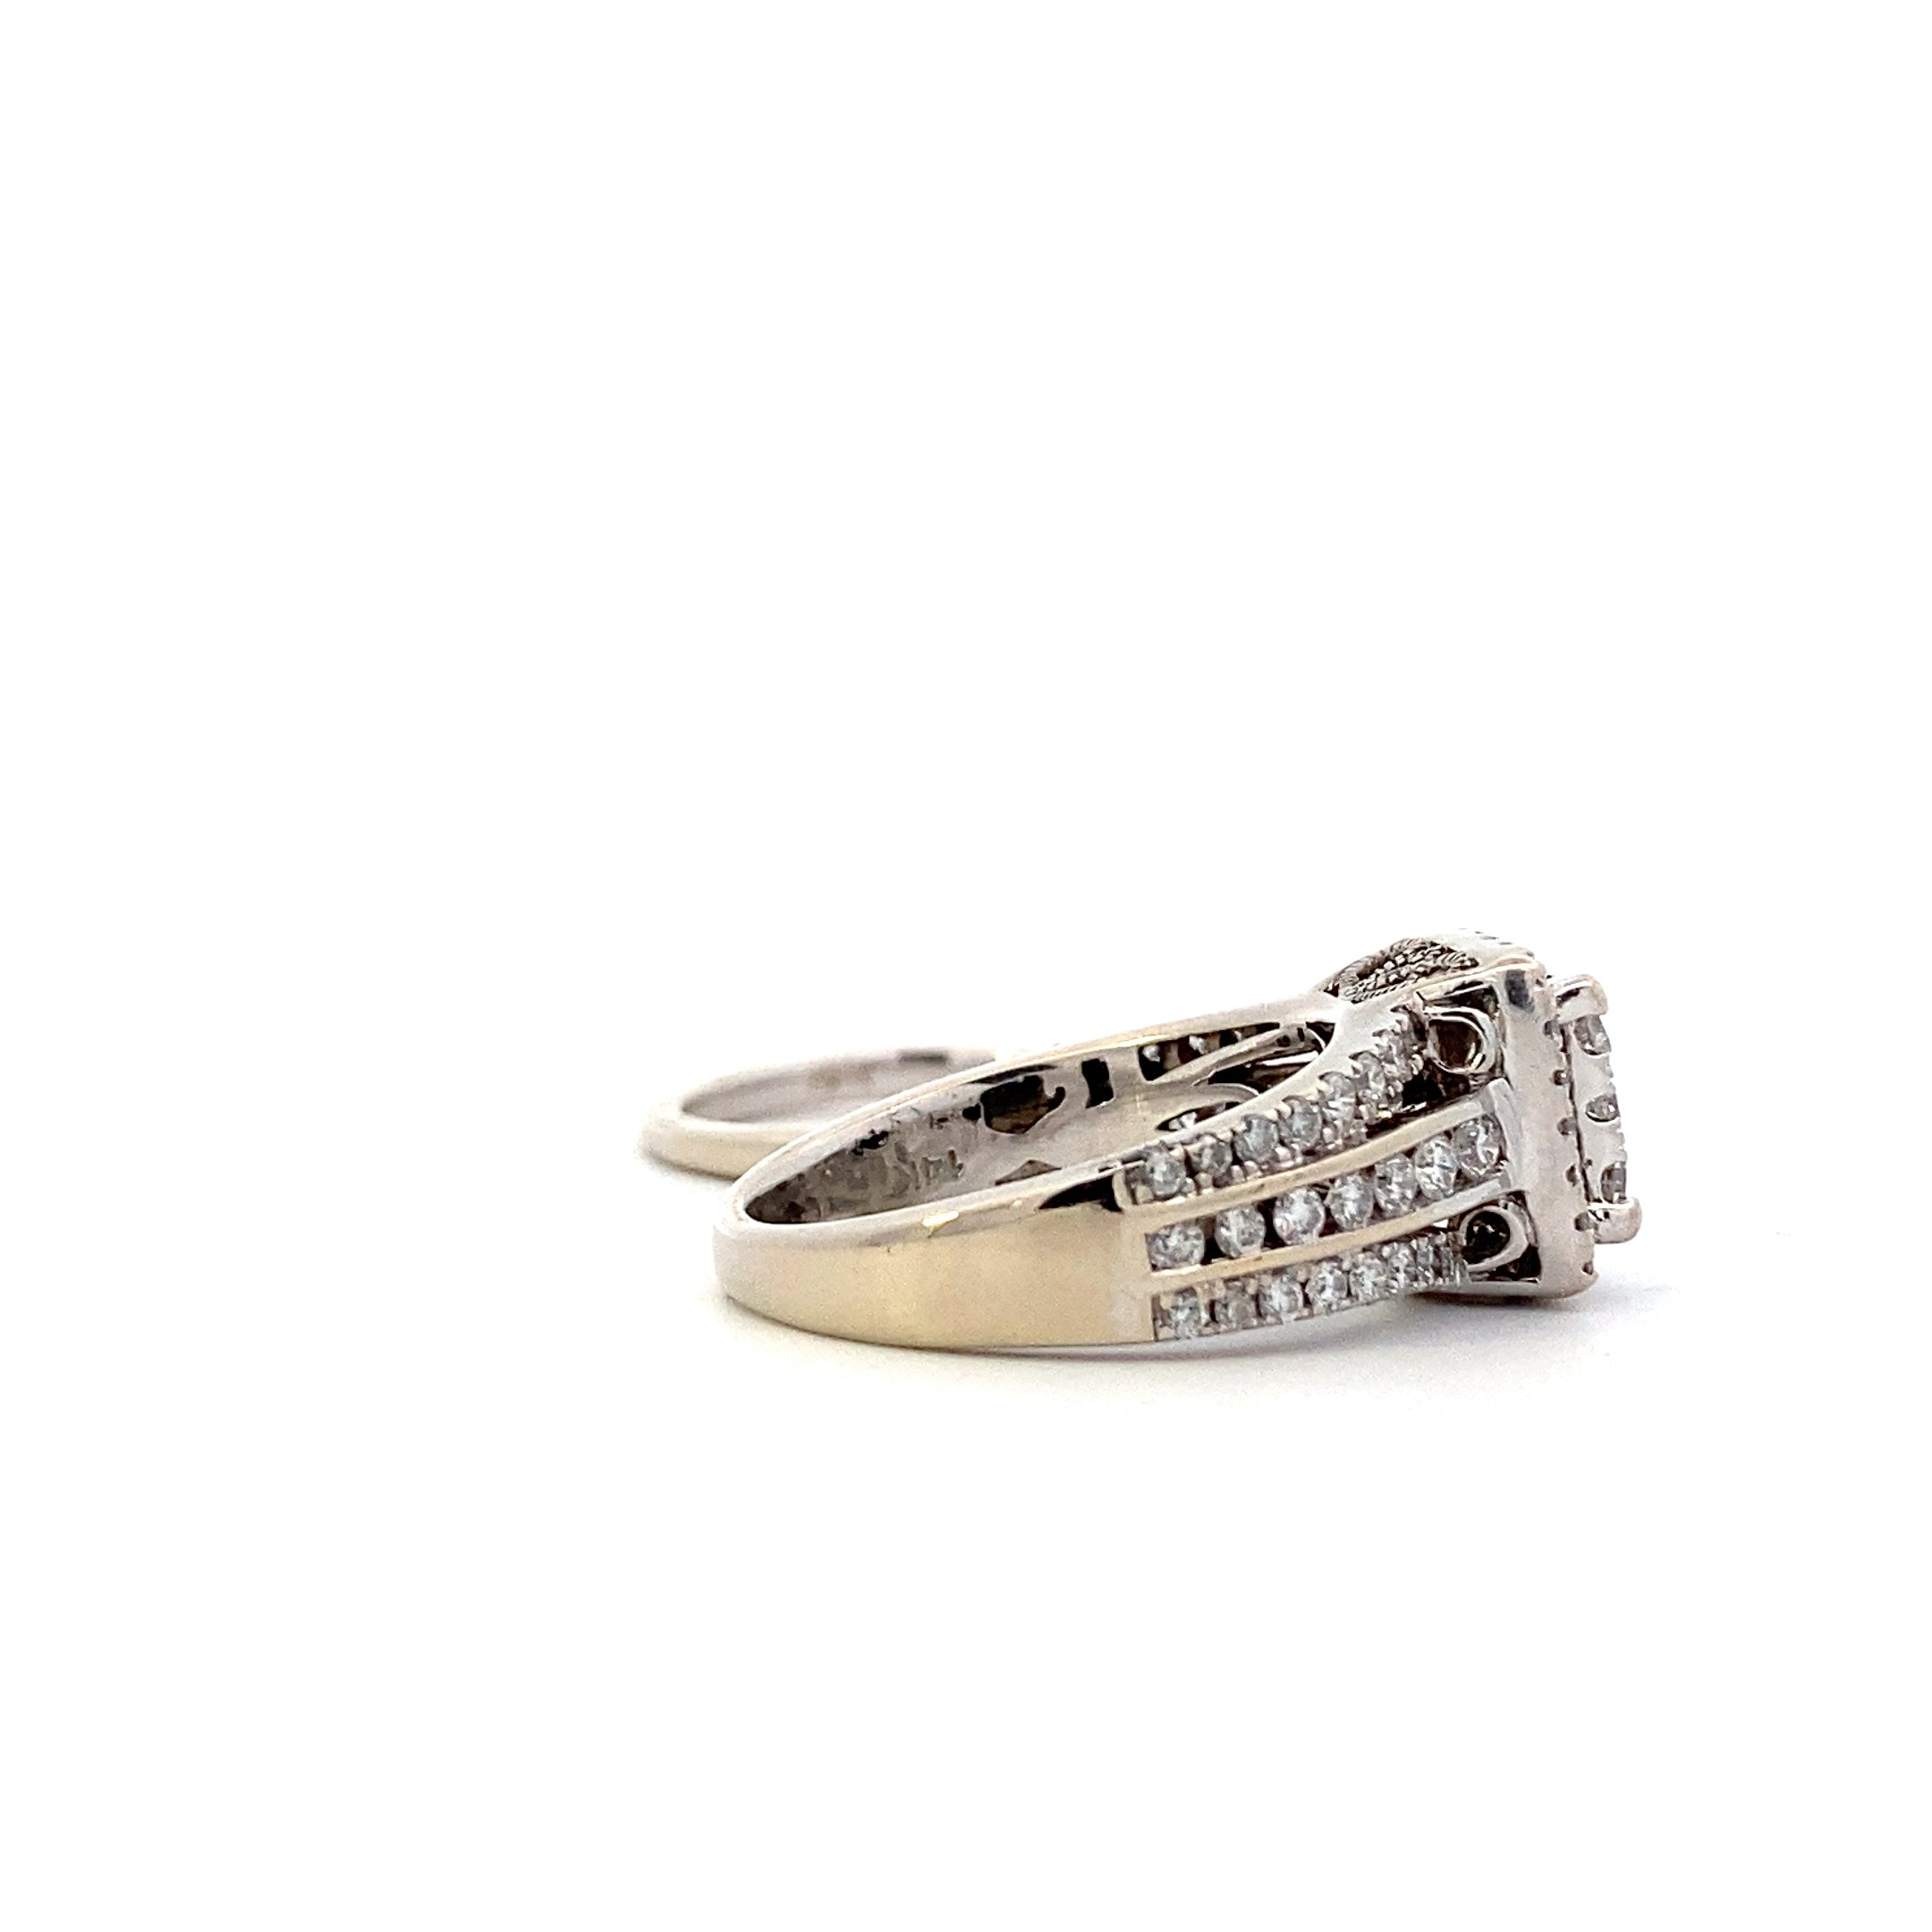 14K White Gold Diamond Engagement & Wedding Ring Set - 1.64ct